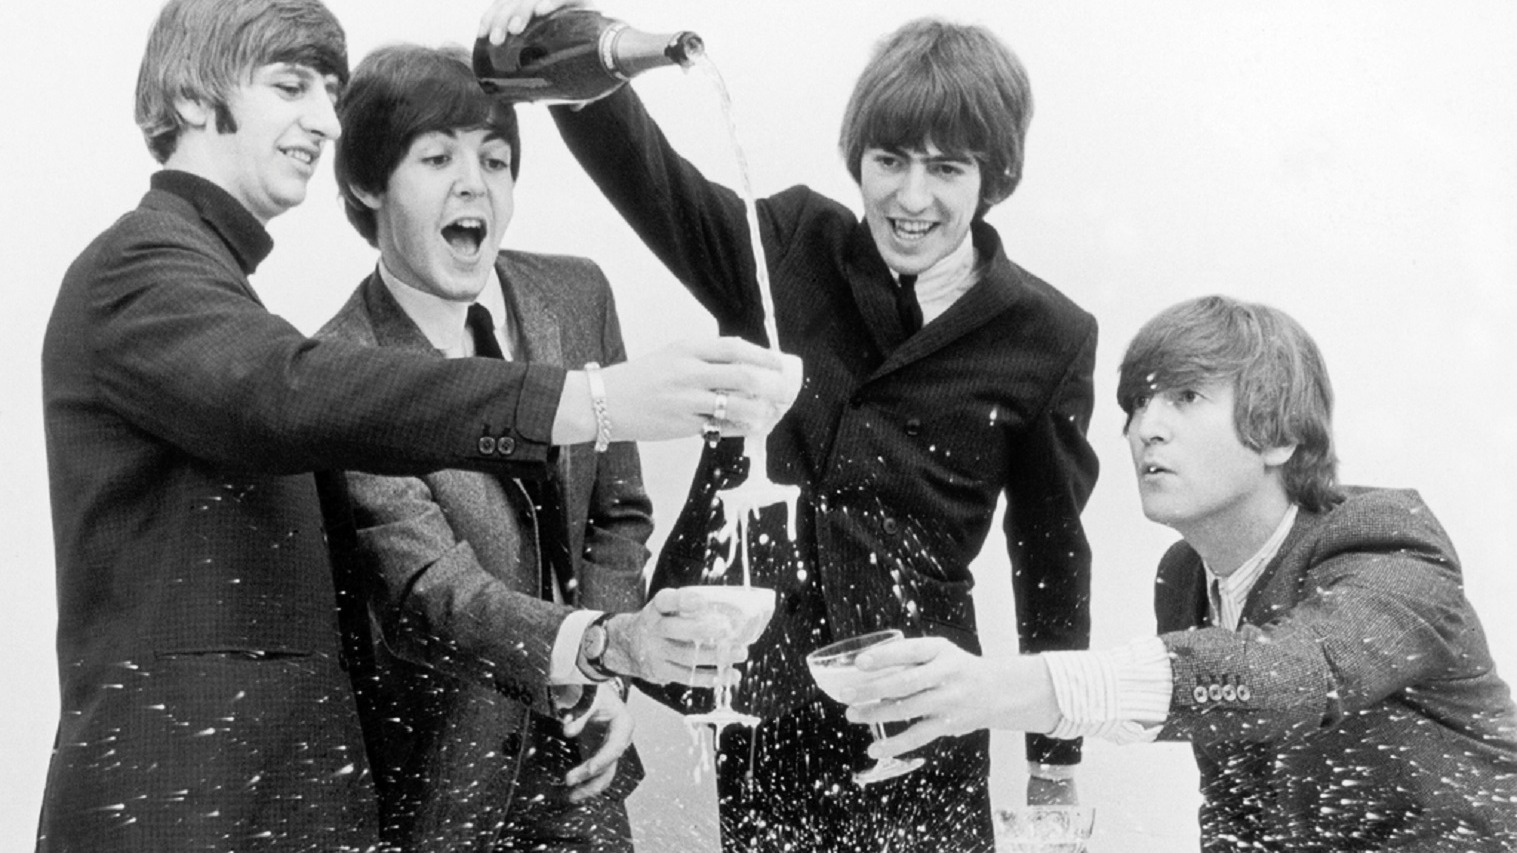 The Beatles : dictionnaire inattendu